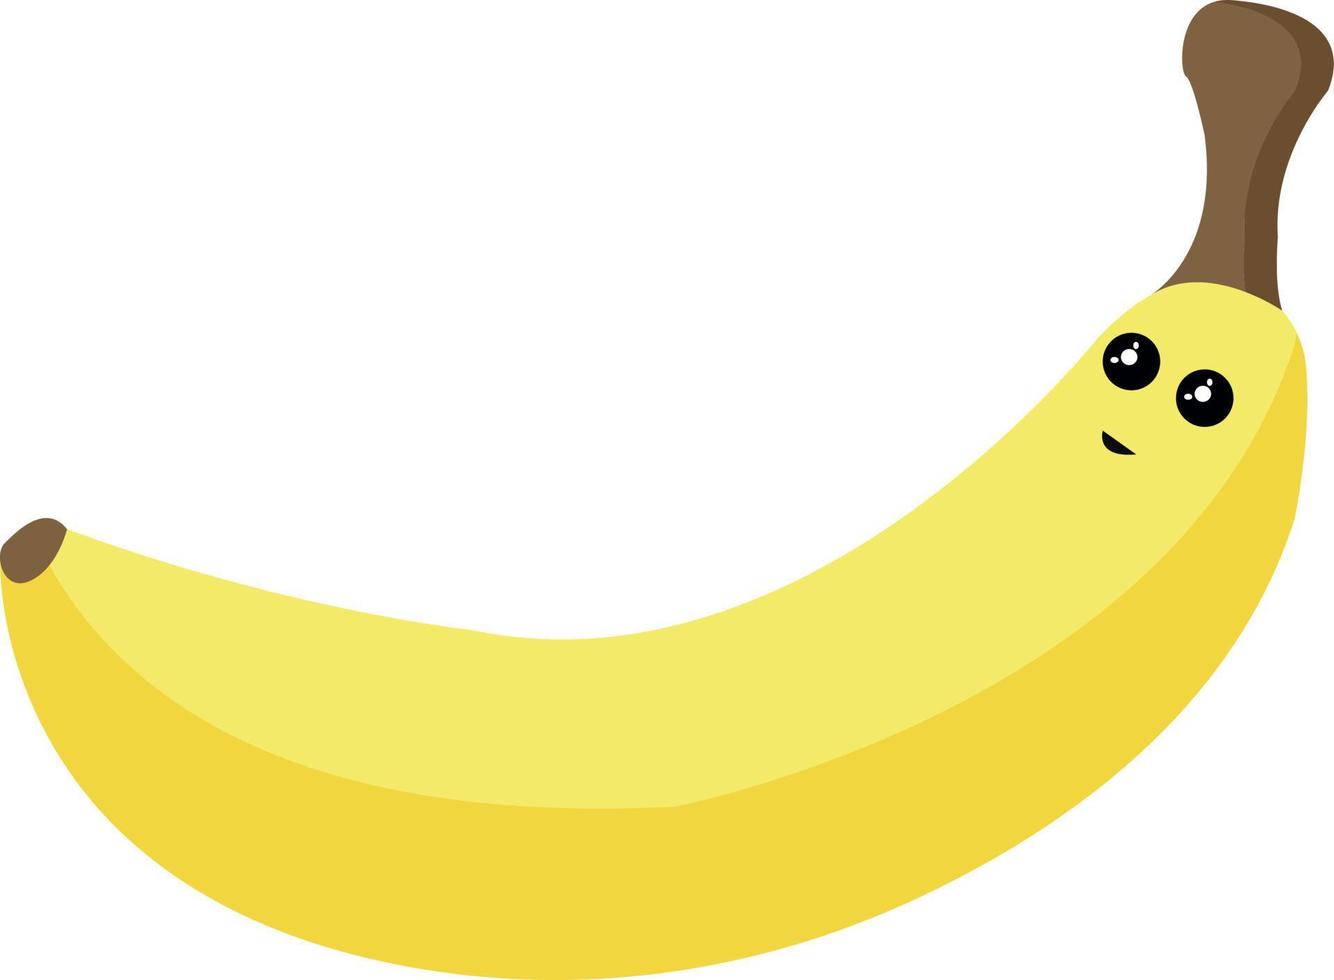 Cute banana, illustration, vector on white background.